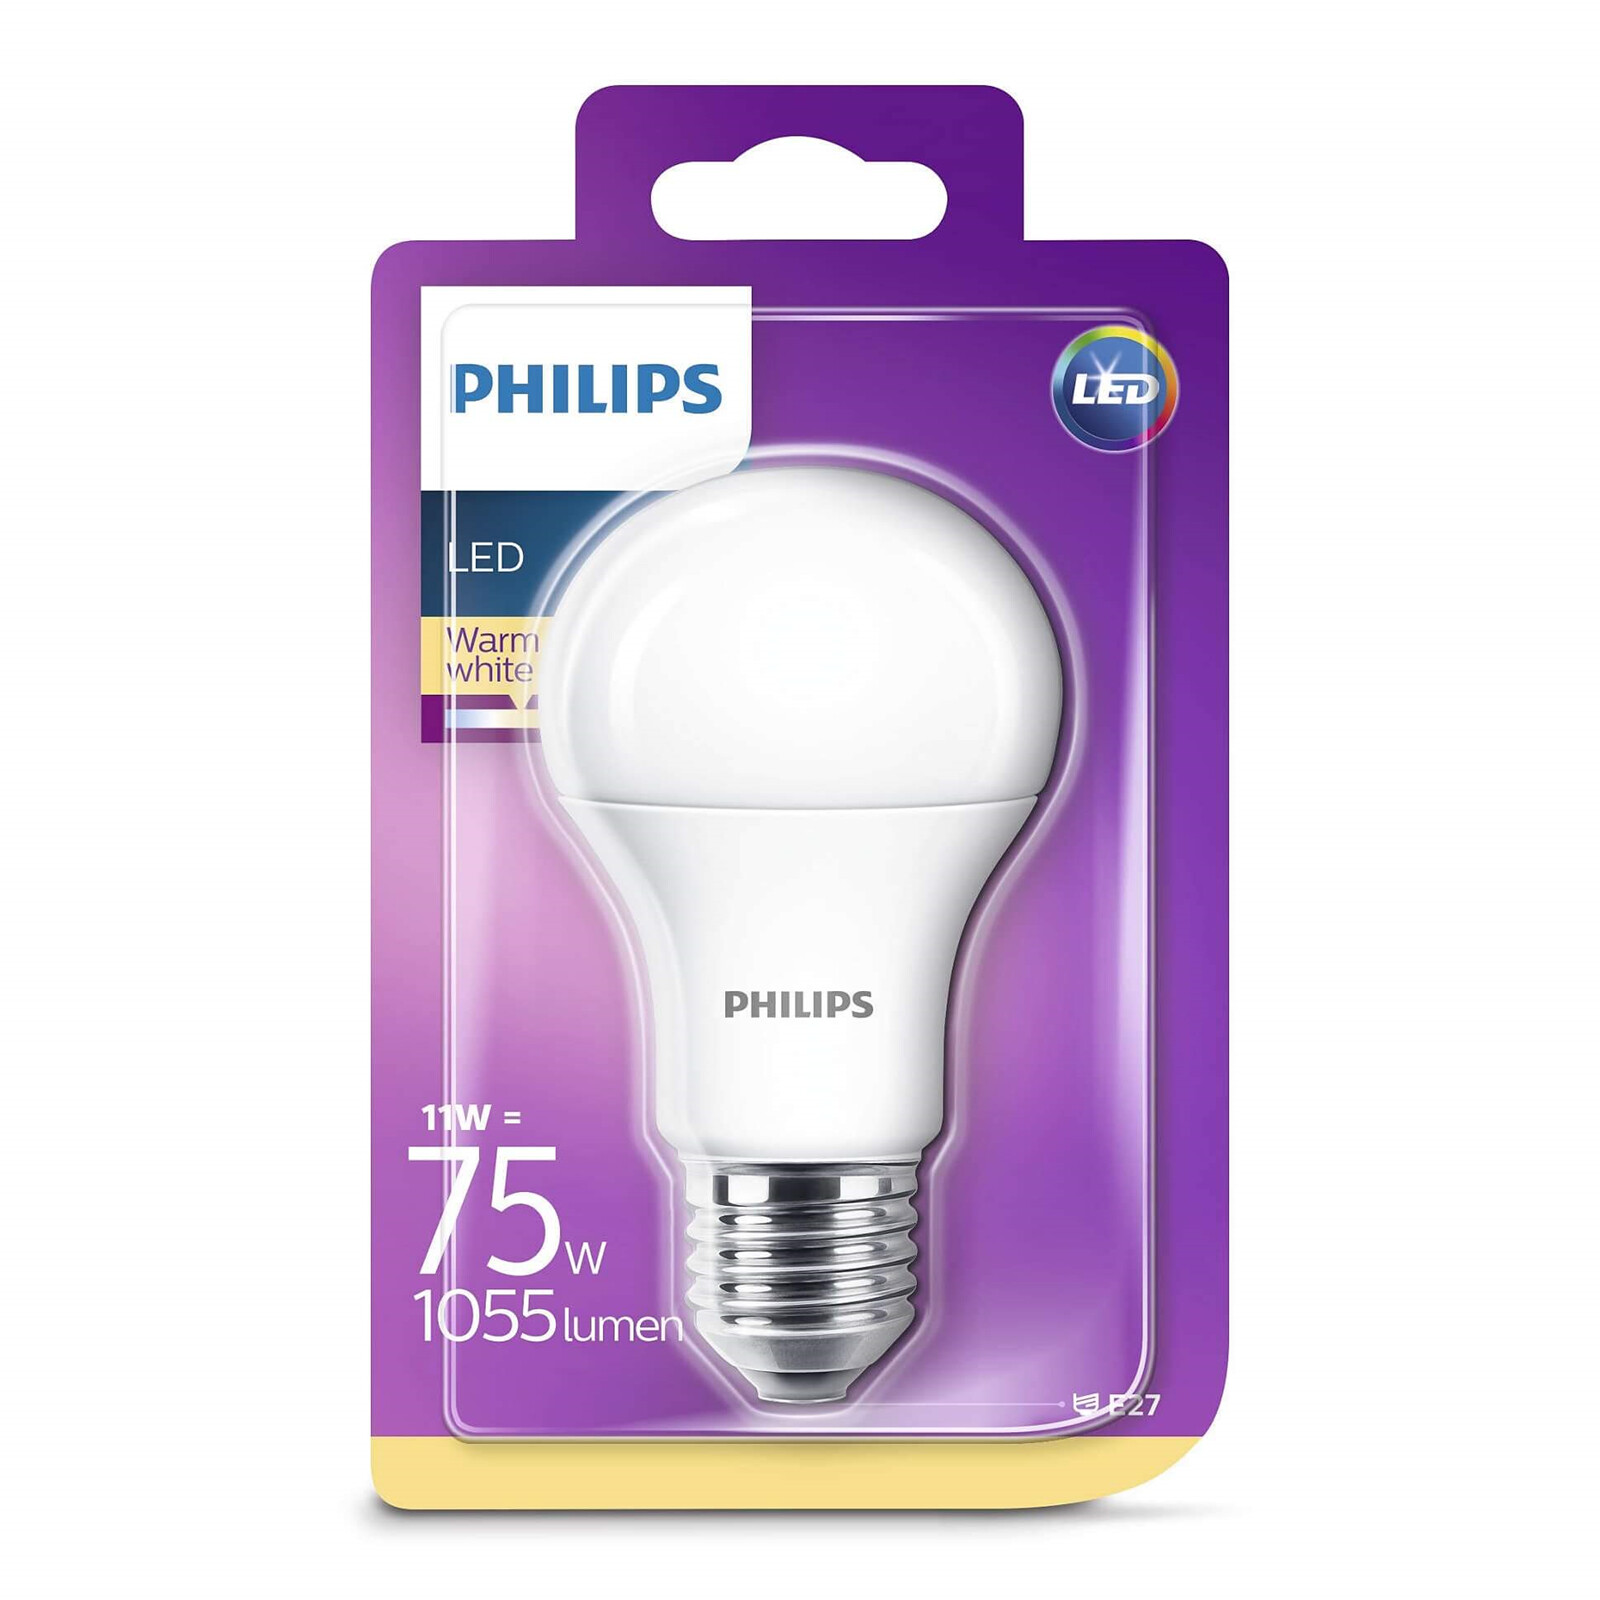 ziekenhuis weefgetouw Terminologie Bulb LED 11W Plastic (1055lm) E27 - Philips - Buy online